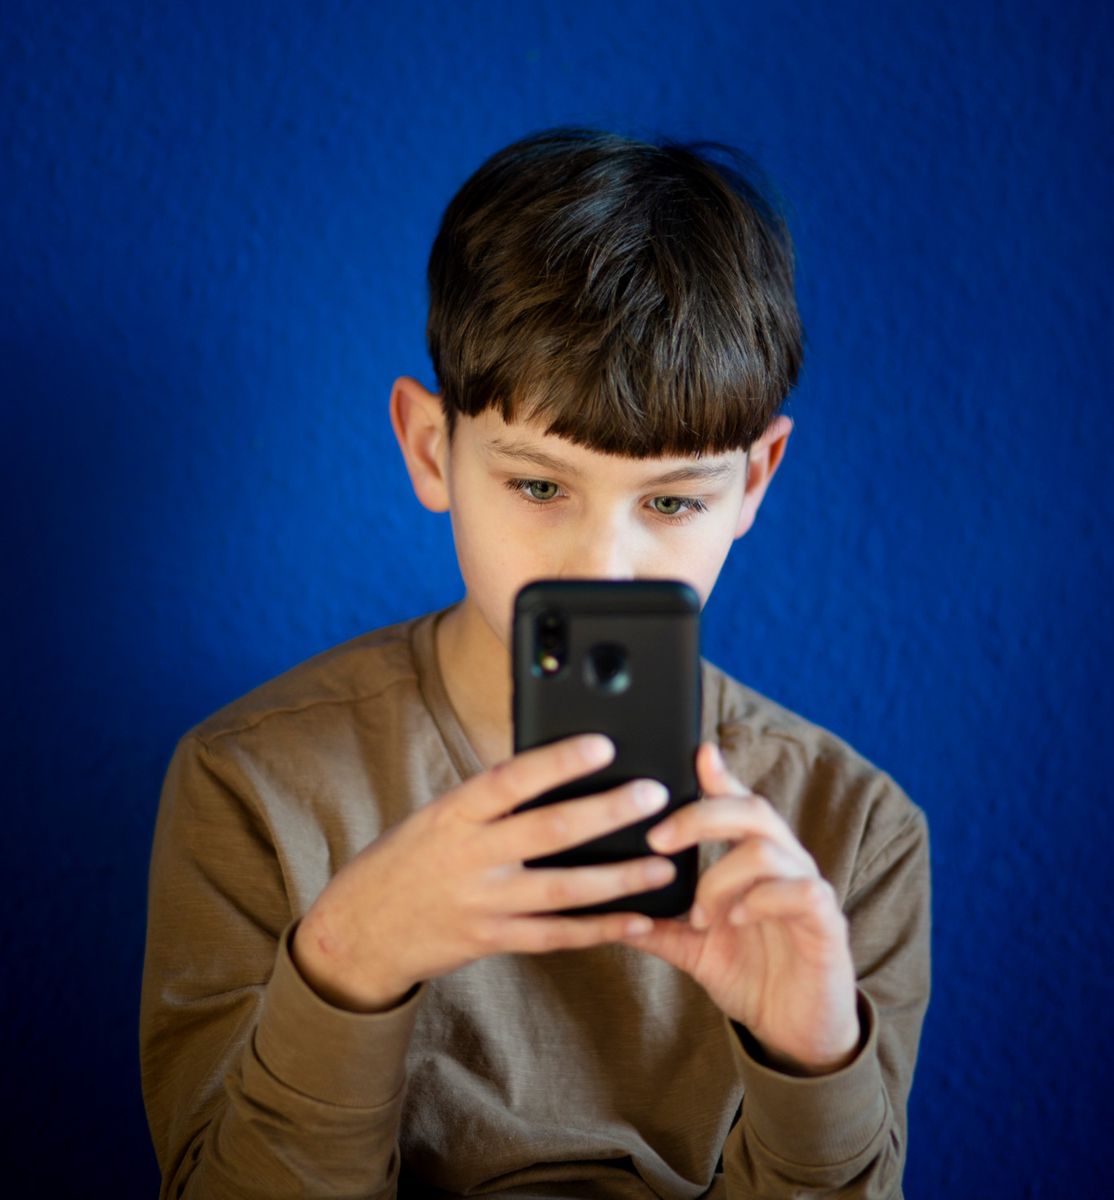 smartphonefreie schulen würden jungen menschen helfen